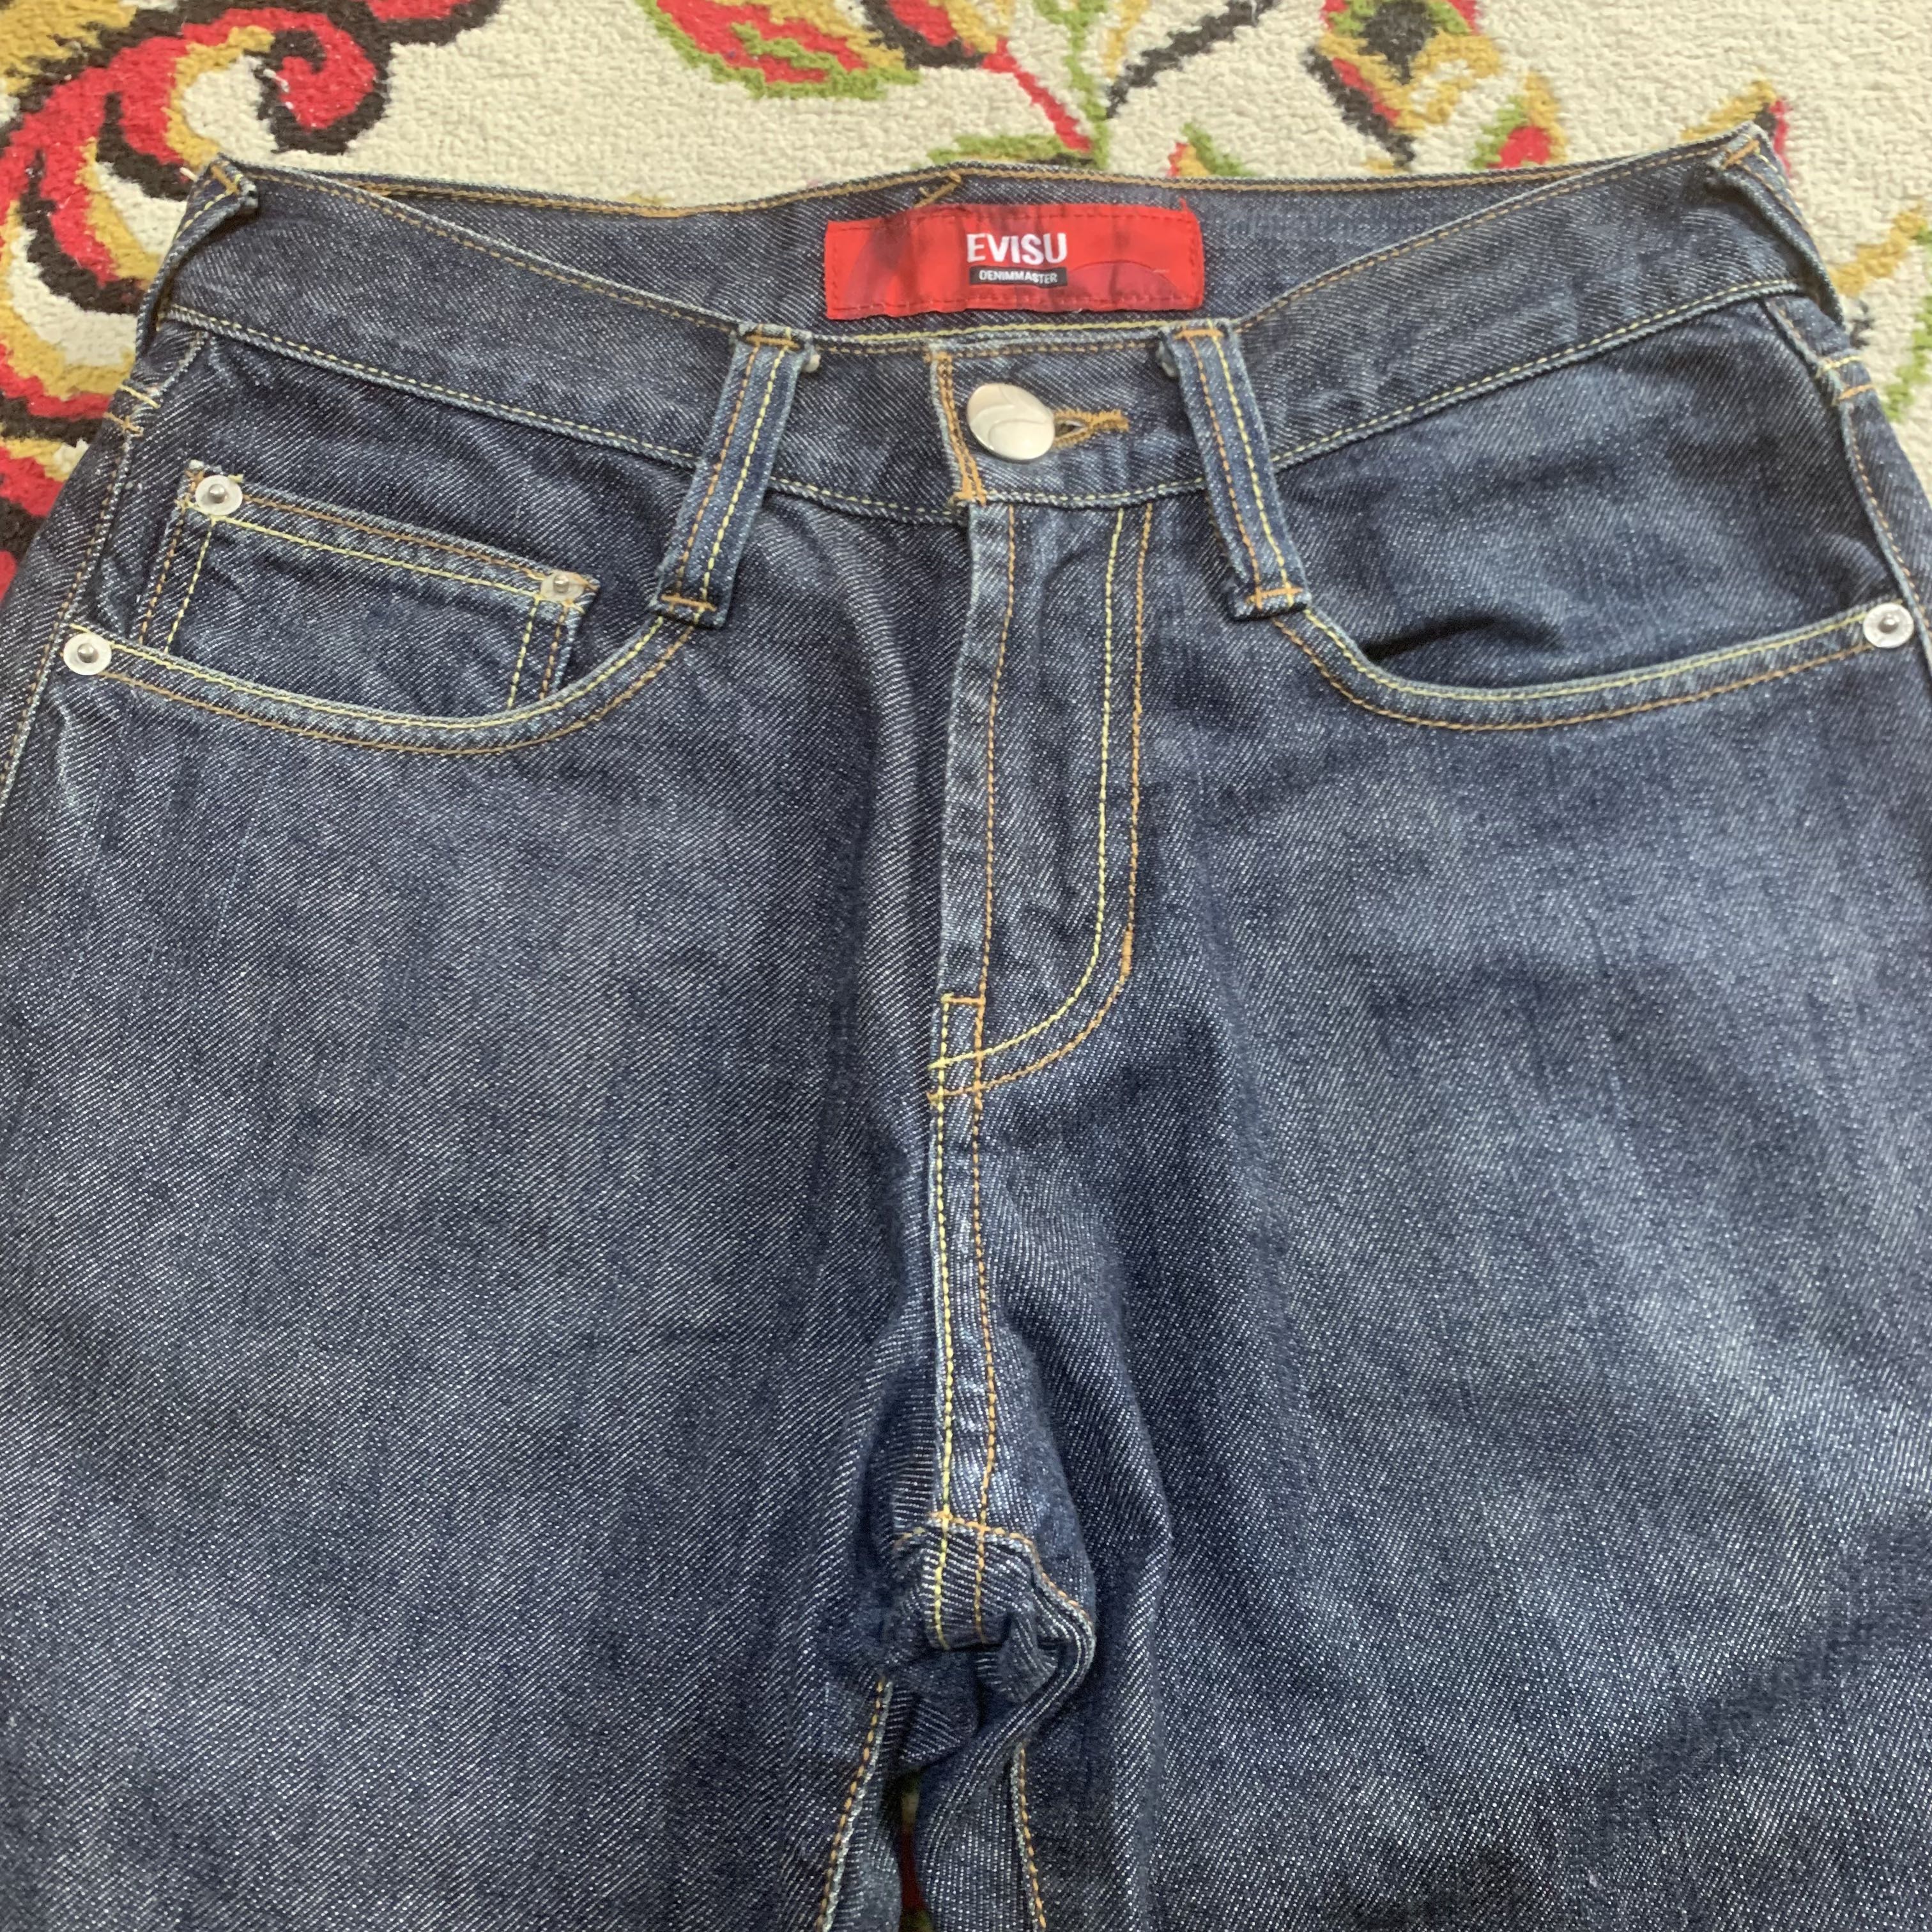 JAPANESE BRAND 🔥 Evisu Genes DenimMaster Selvedge Jeans - 3